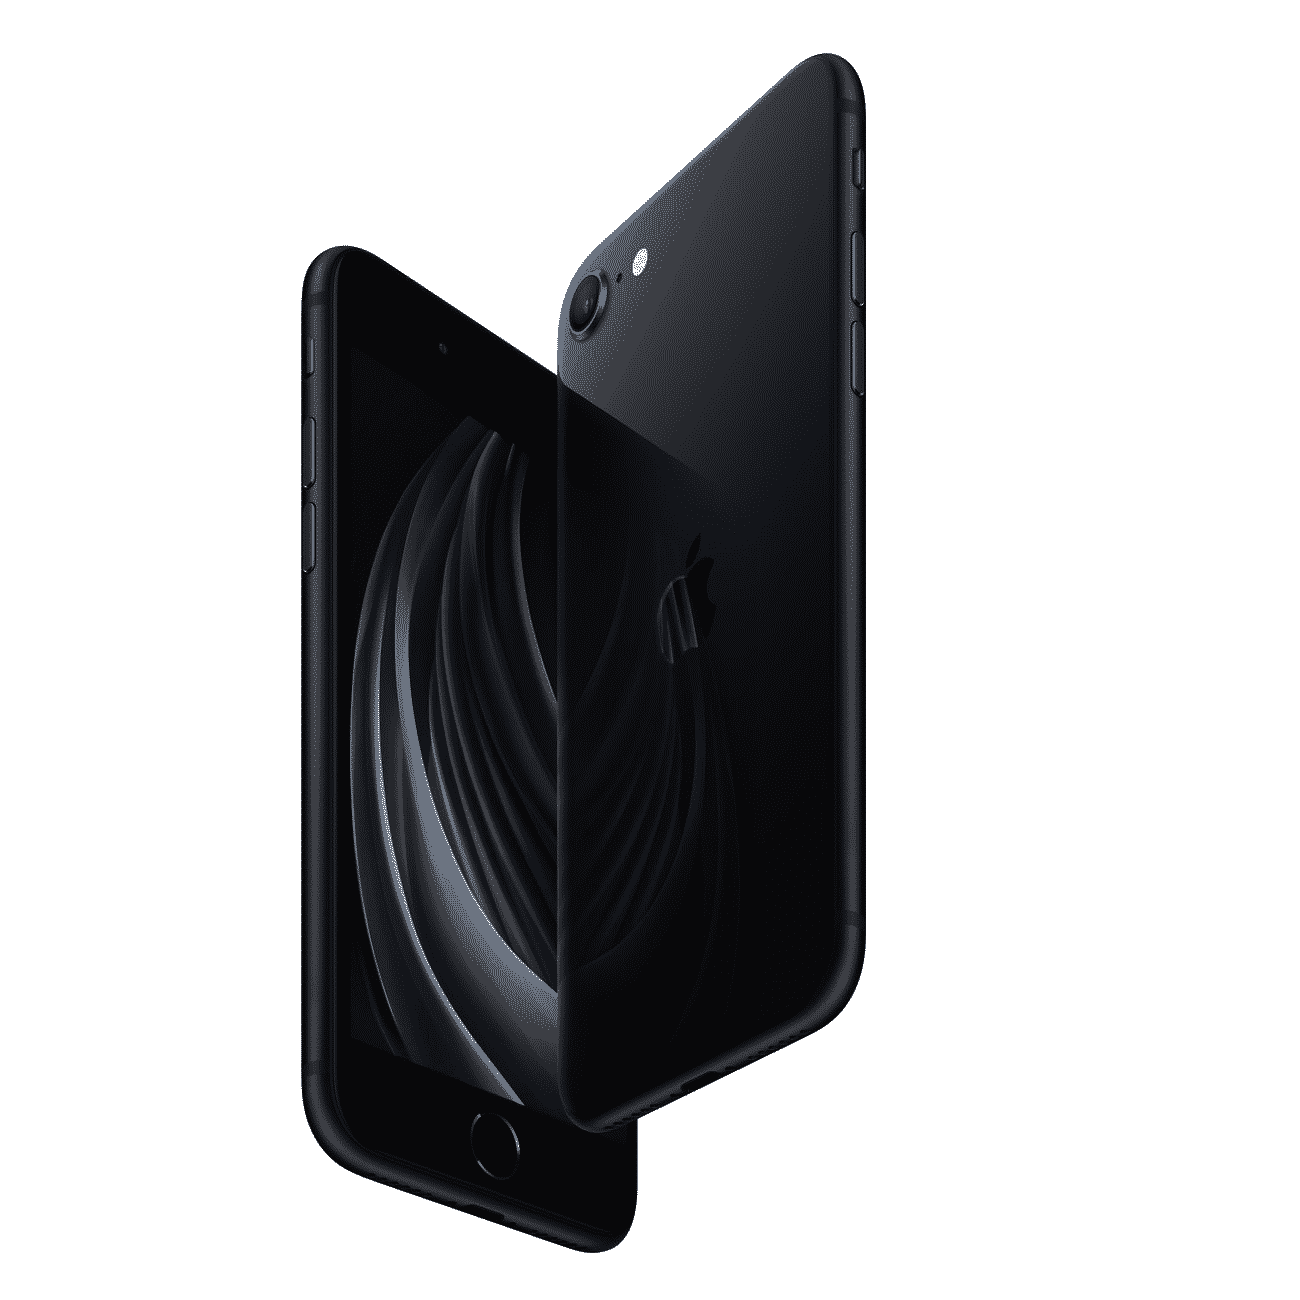 Apple iPhone SE (2020) - 64GB - Zwart - DealsTracker.nl